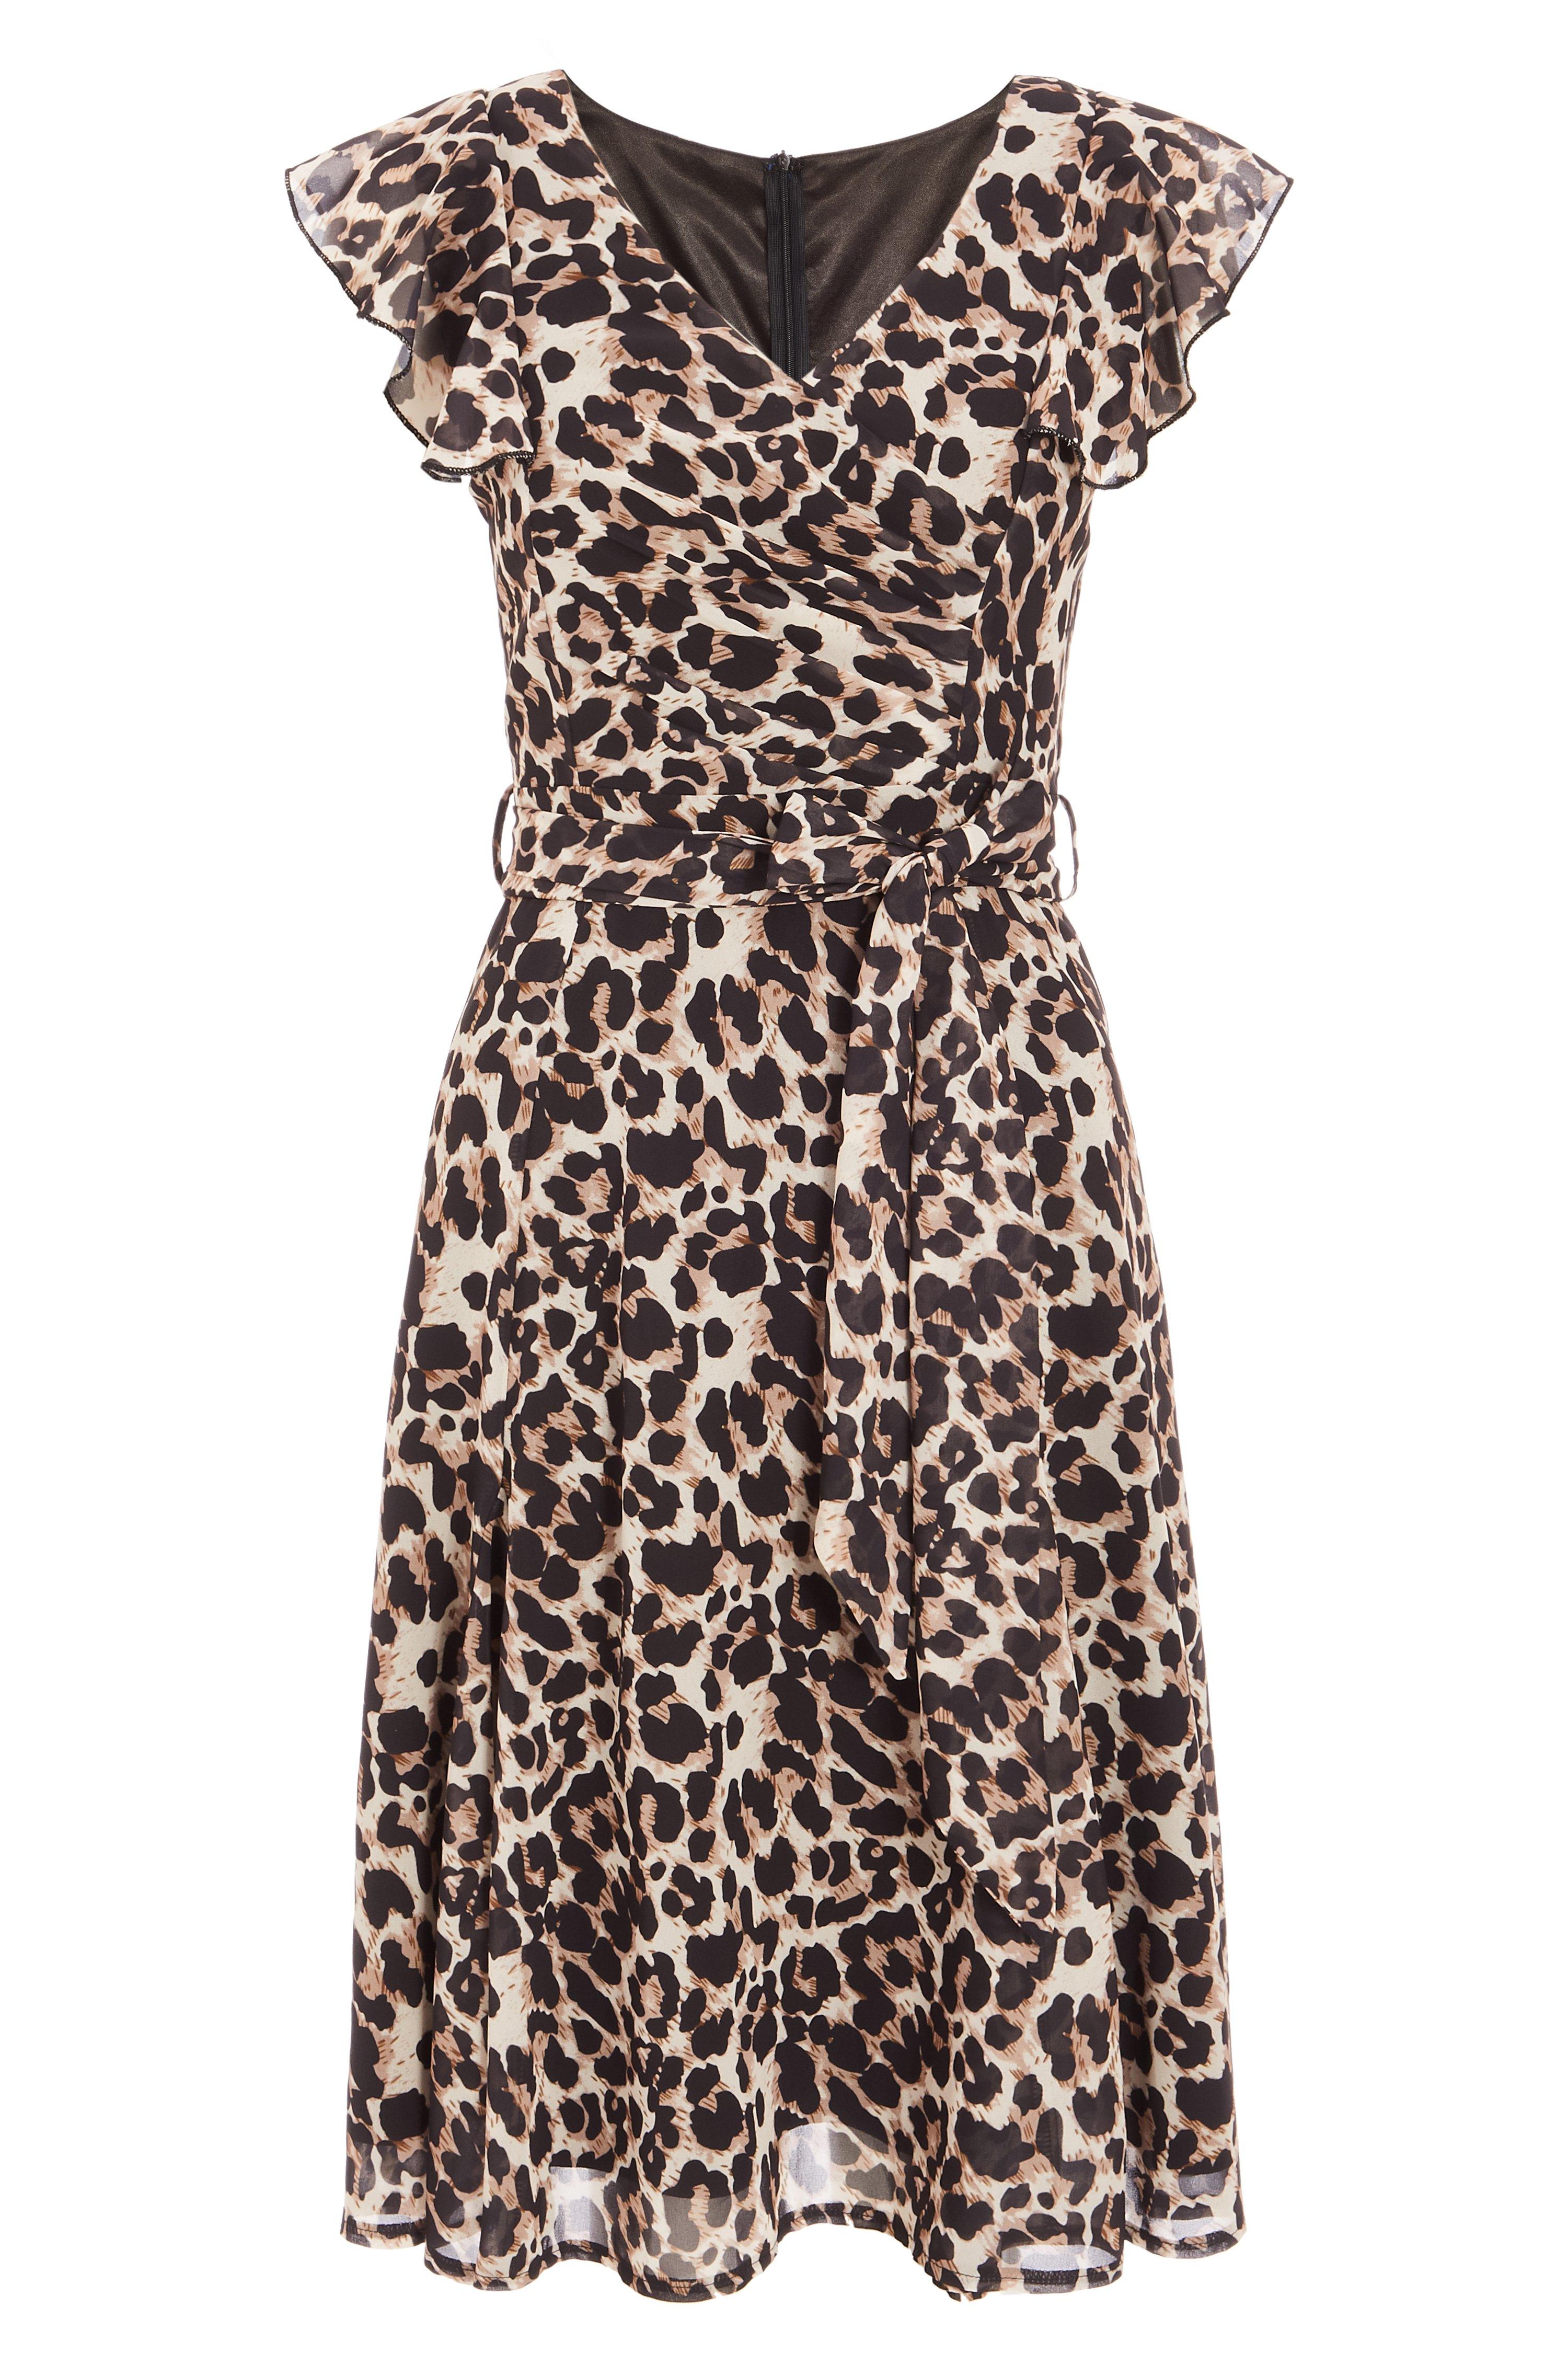 Brown Leopard Print Frill Dress - Quiz Clothing